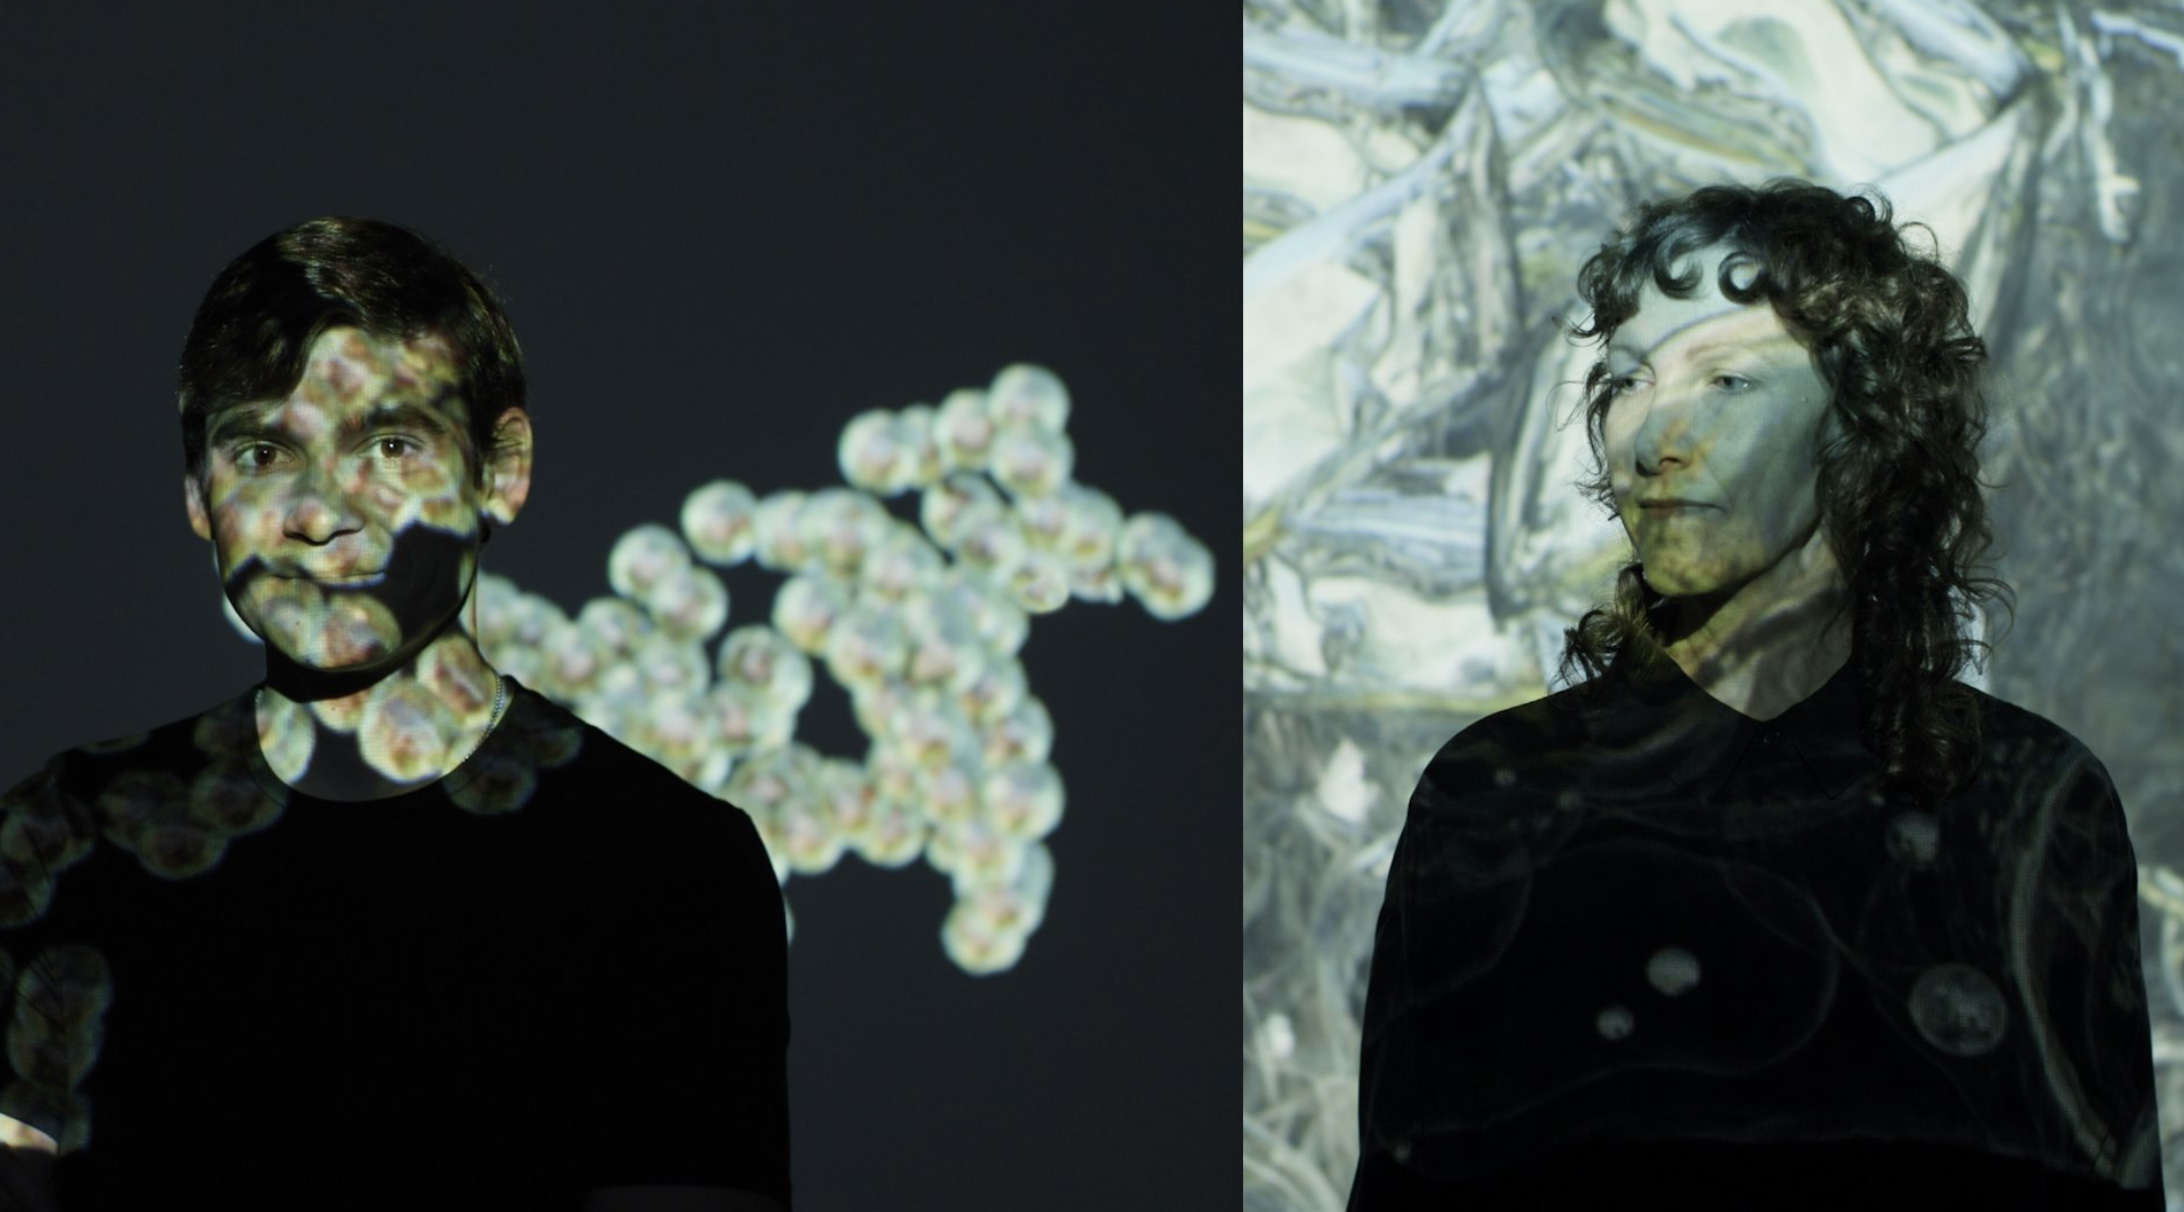 Dark, almost black and white image of biophysicist, Adman Lamson, and transdisciplinary artist, Laura Splan